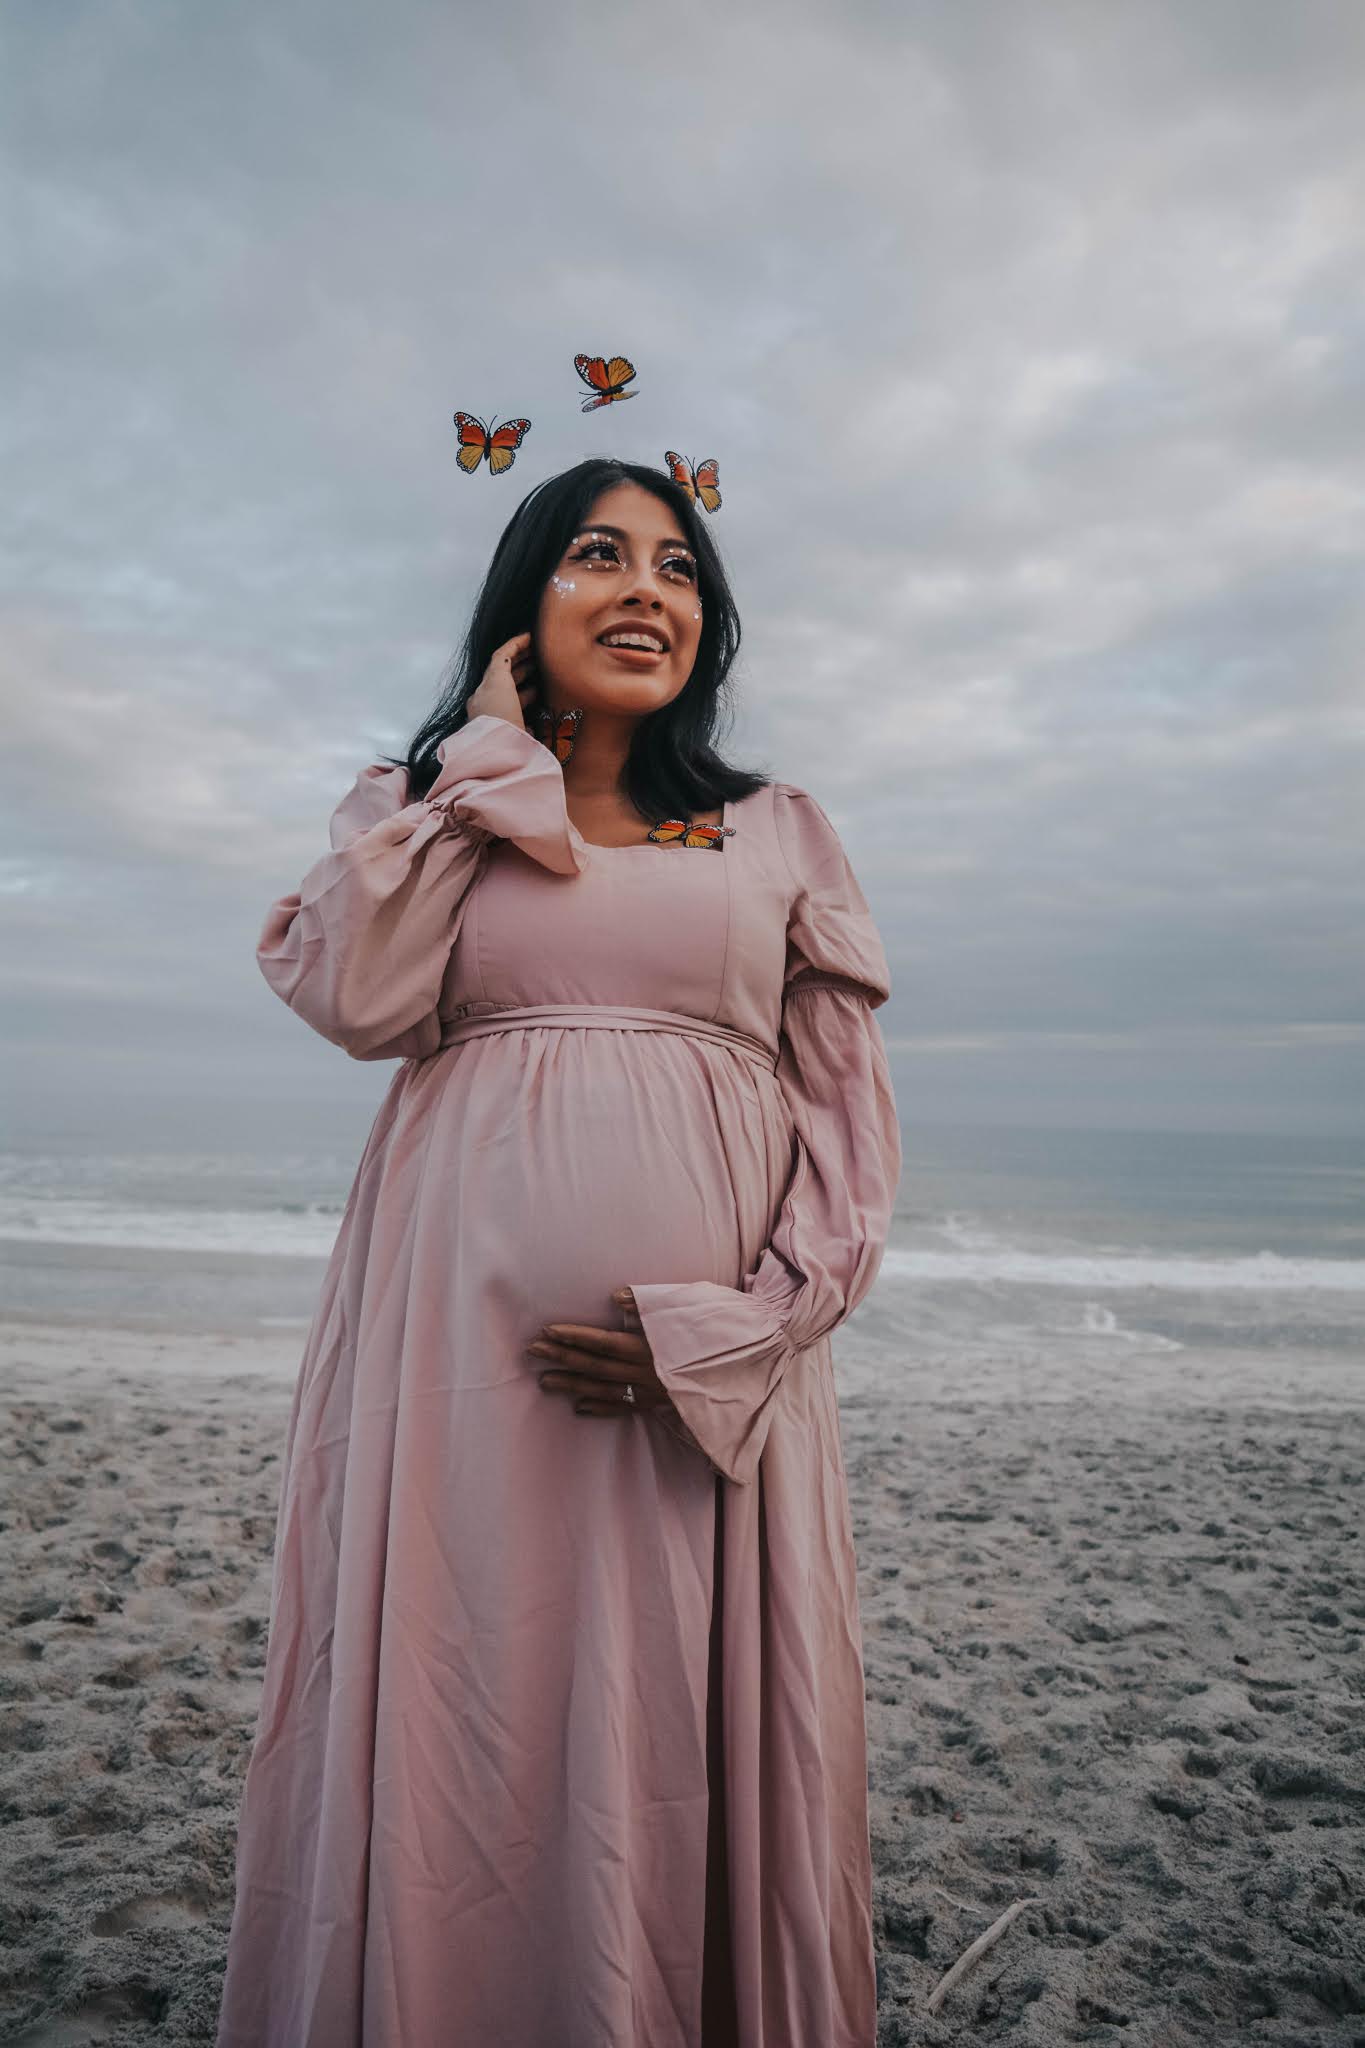 Maternity Photo Shoot Ideas: The Butterflies